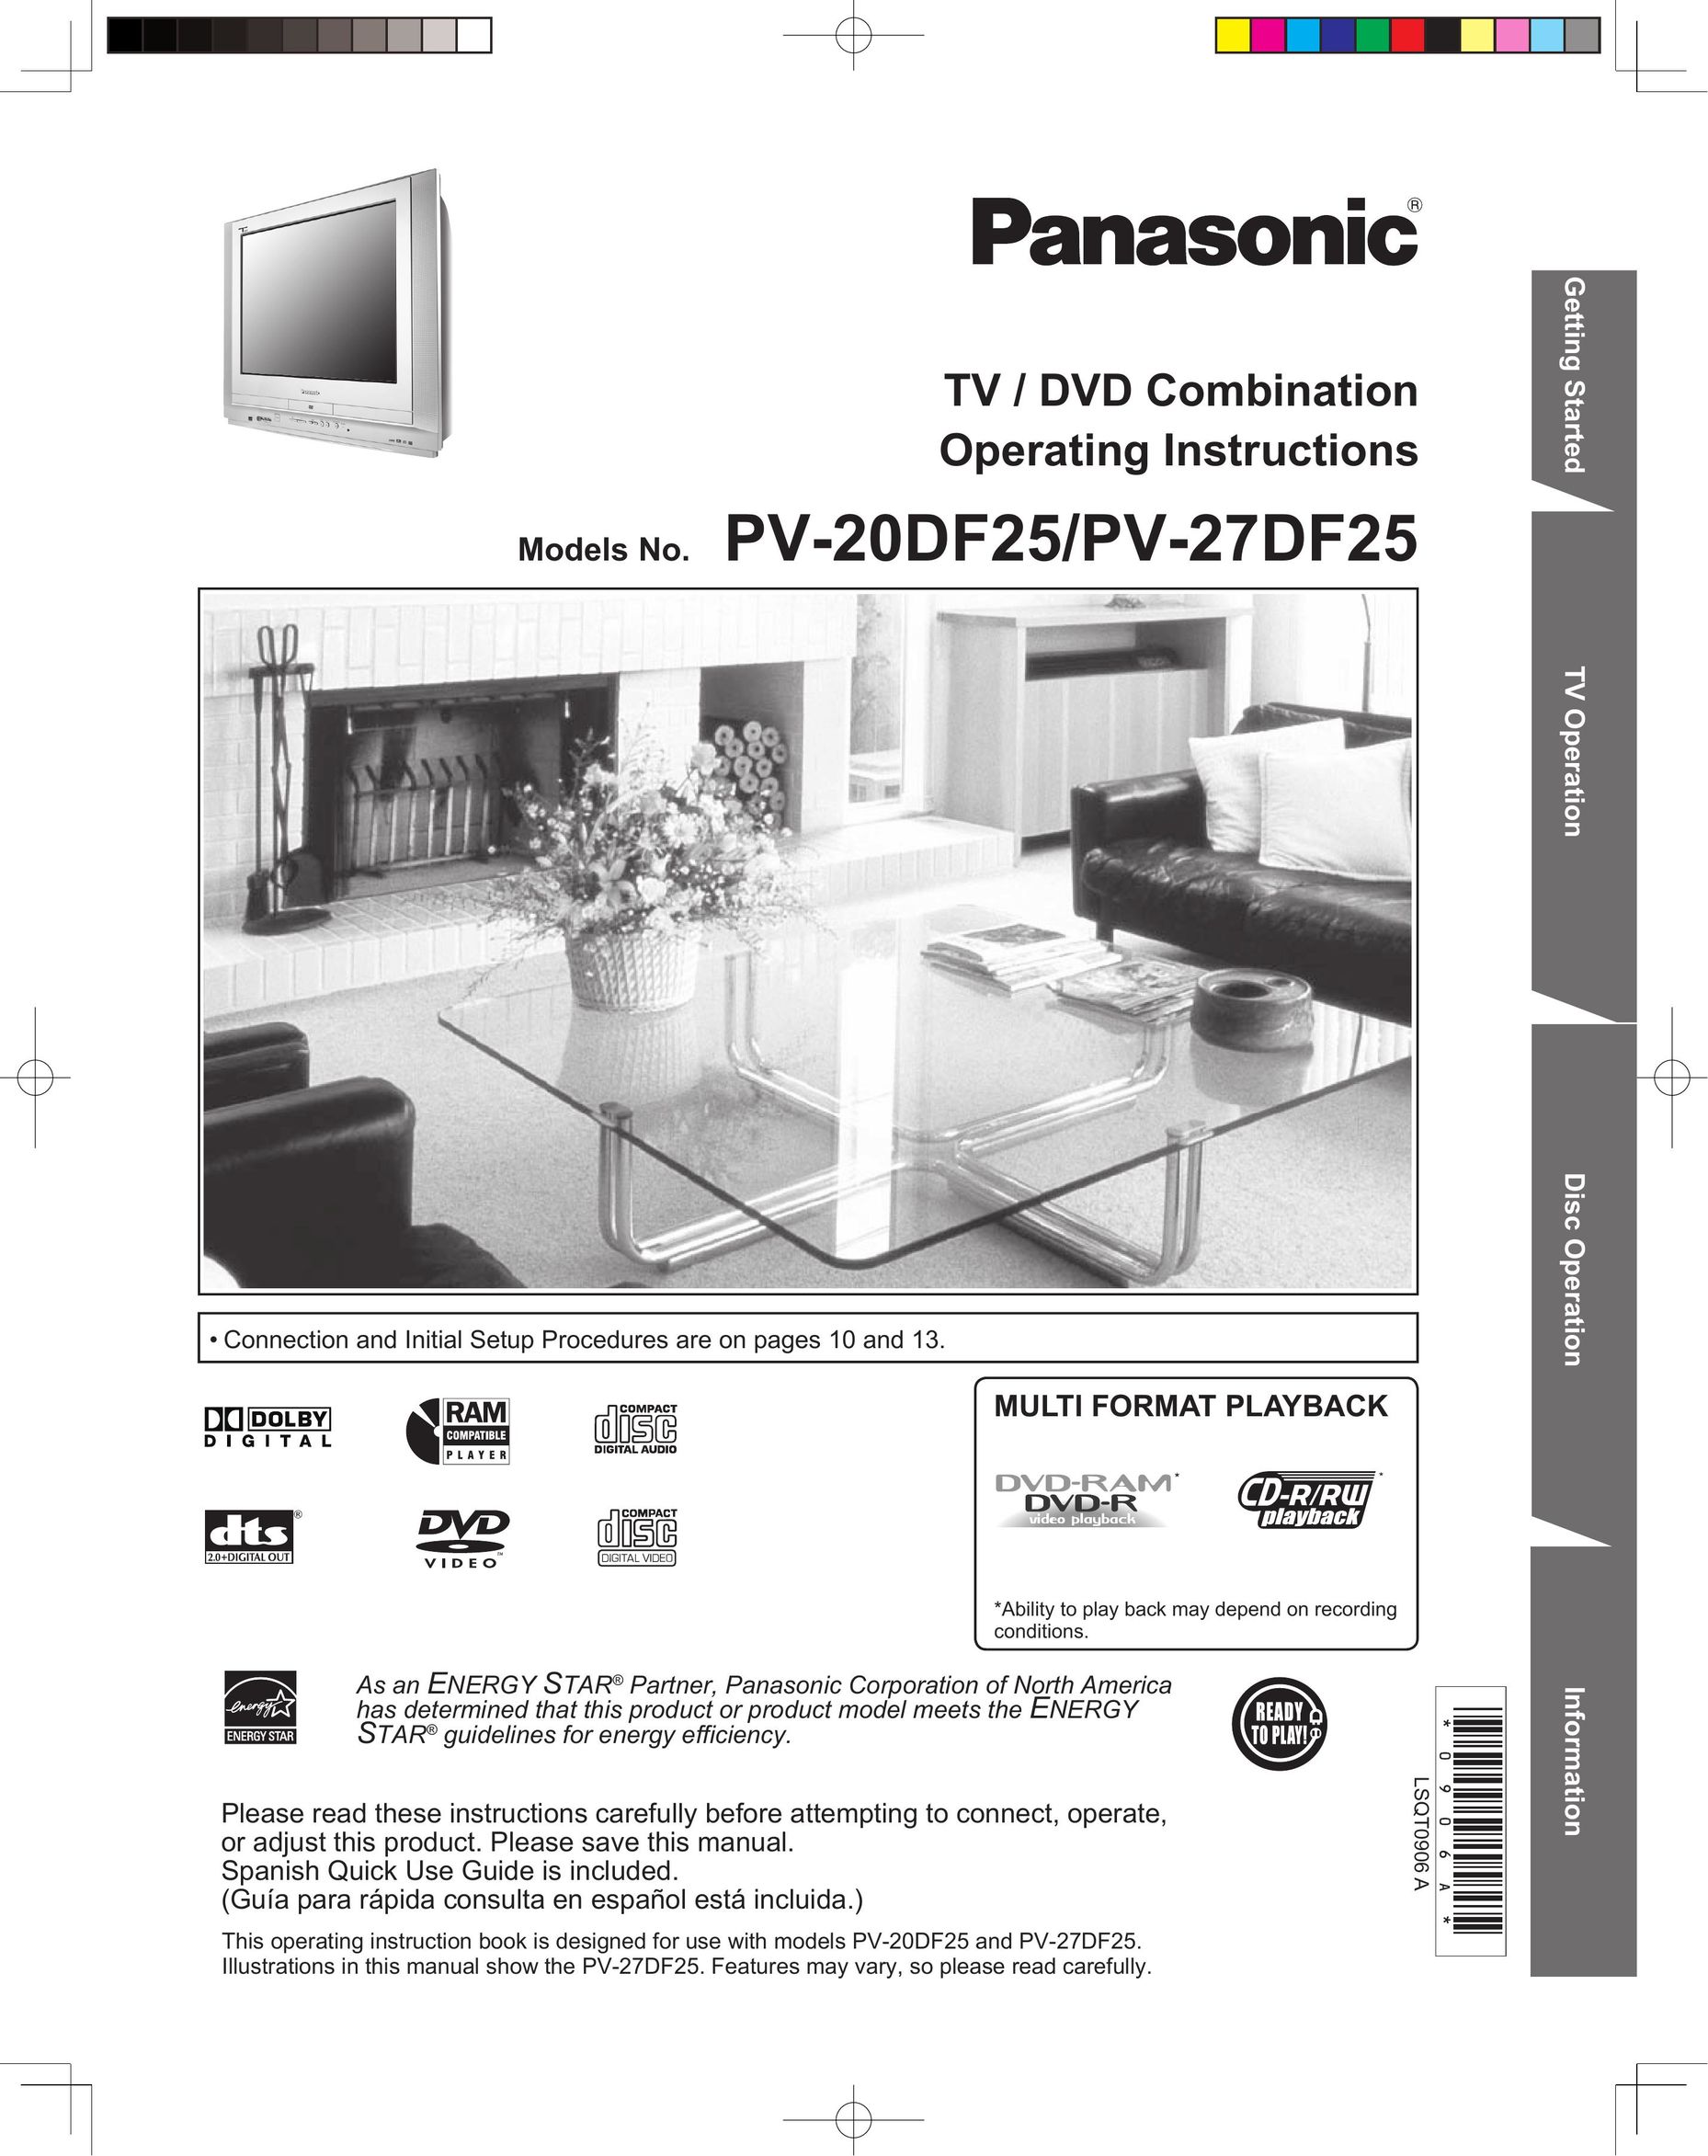 Panasonic PV 27DF25 TV DVD Combo User Manual